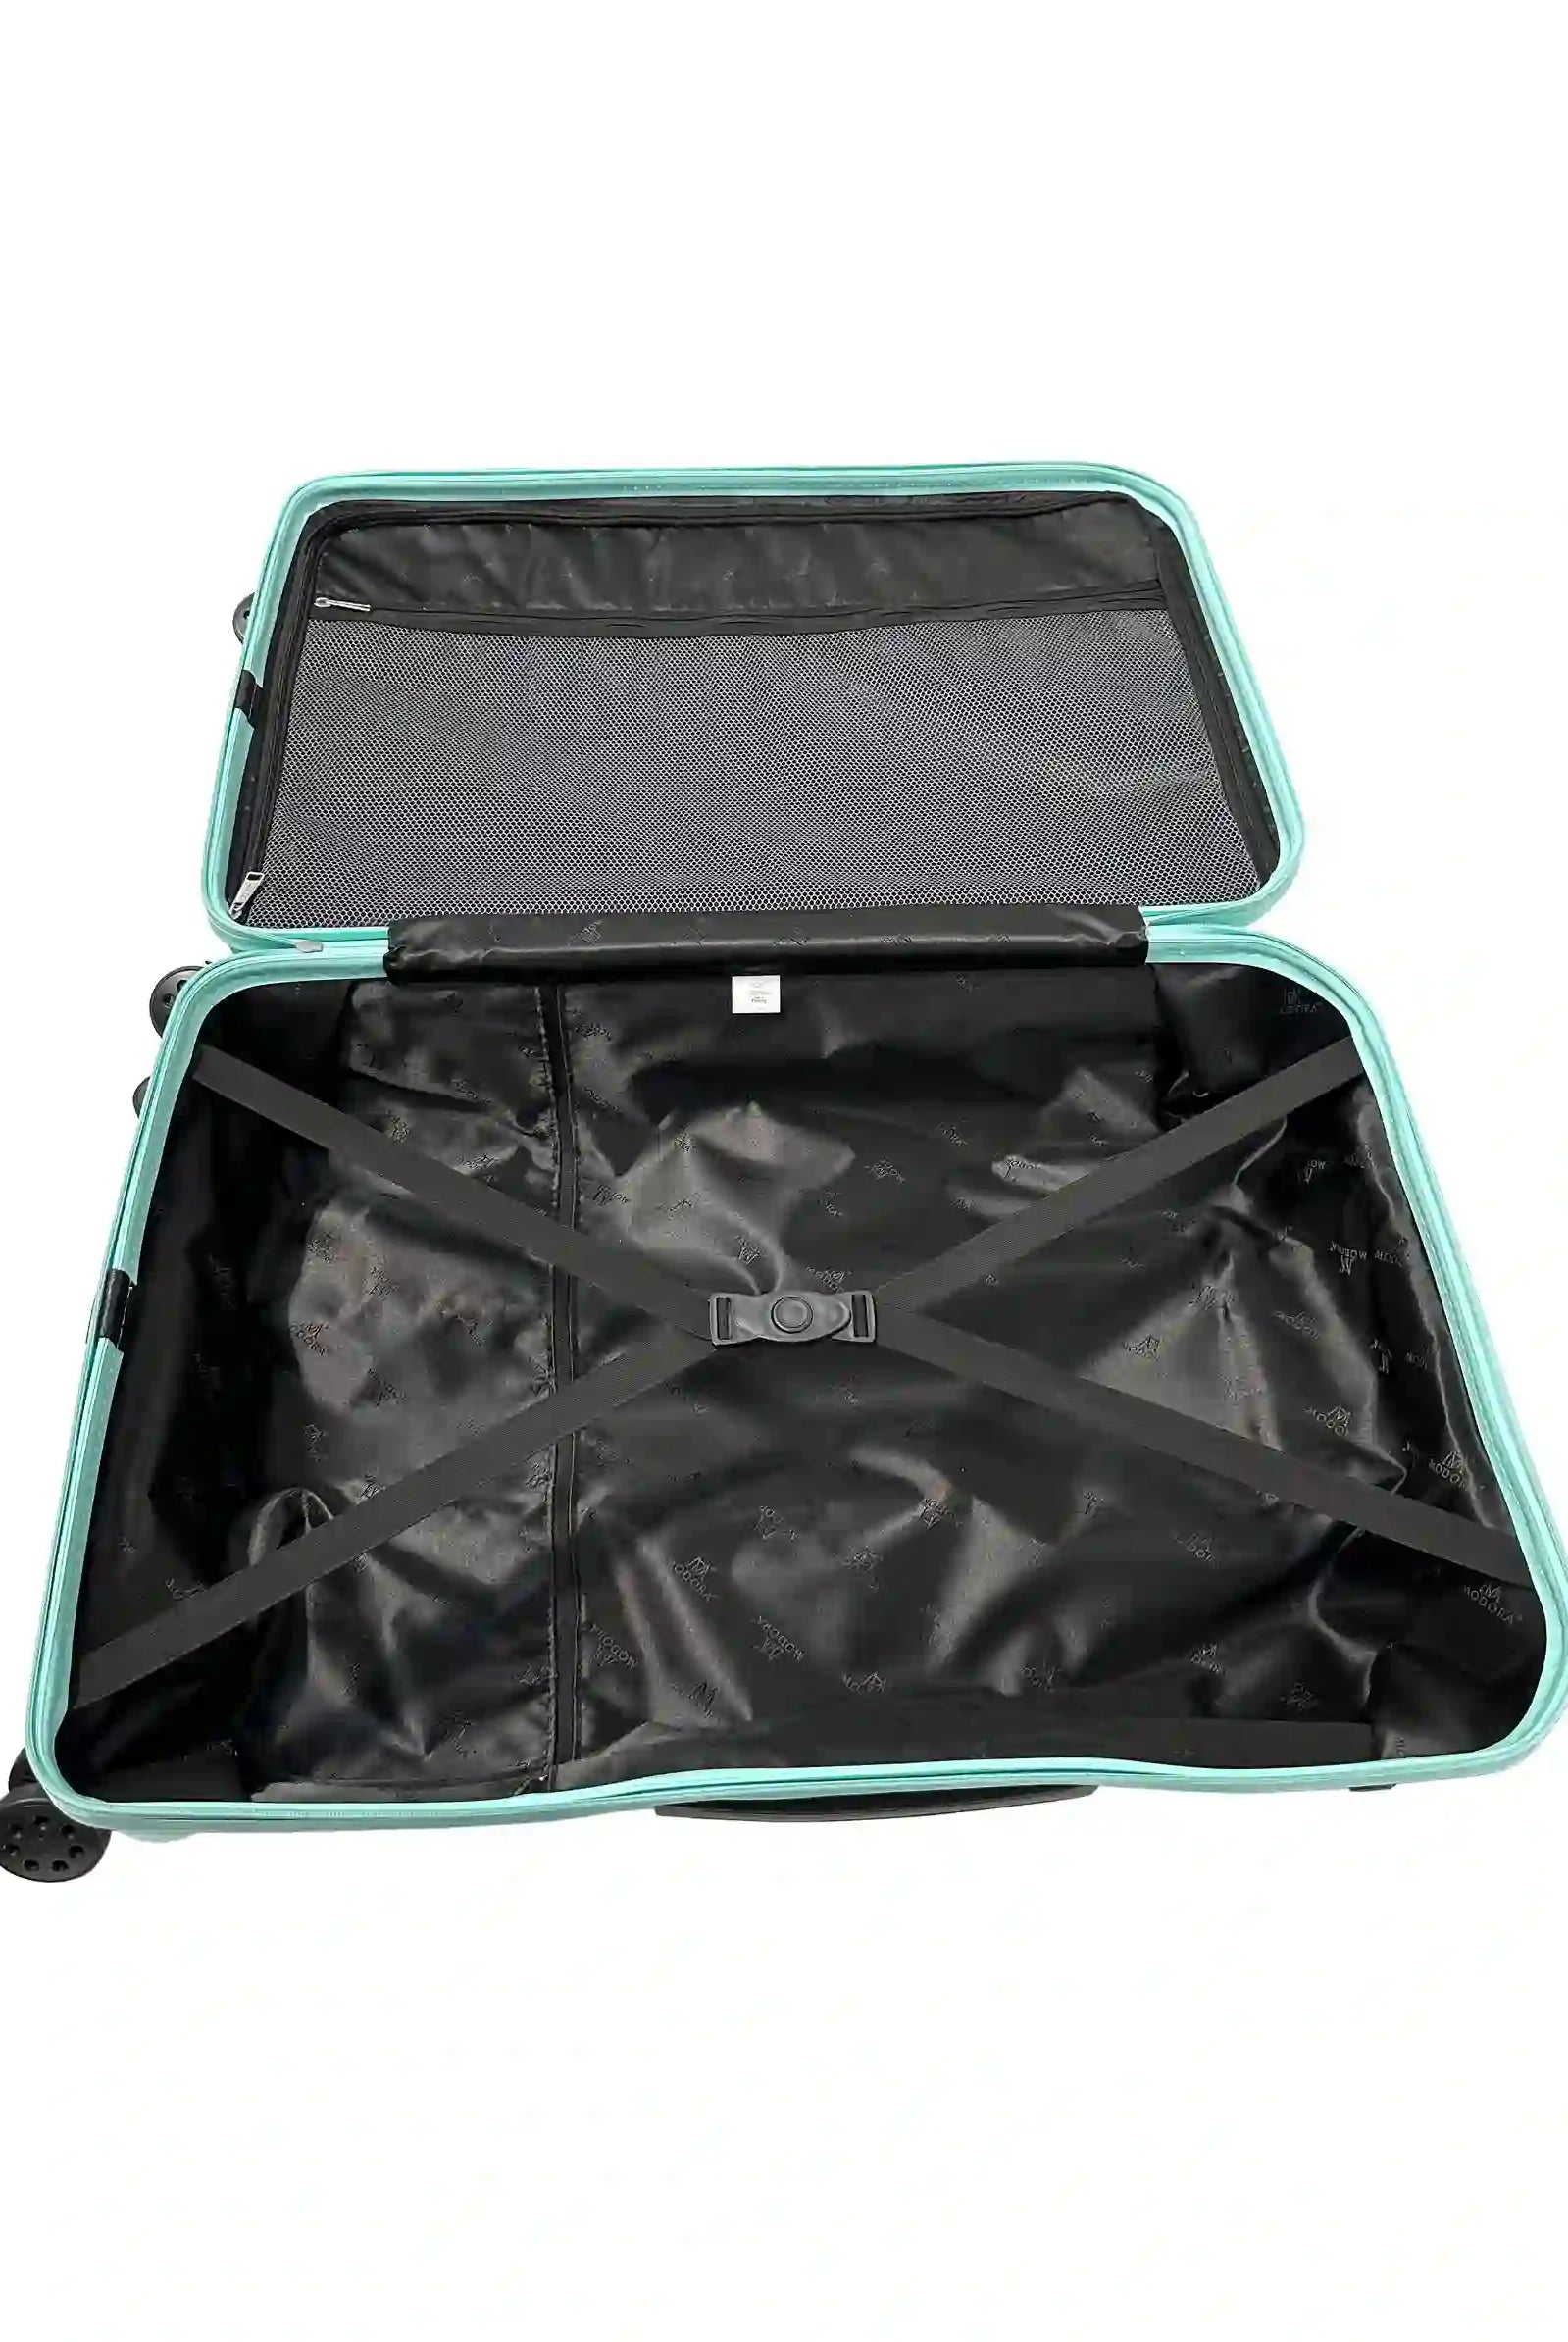 Large lightweight green suitcase 4 wheels